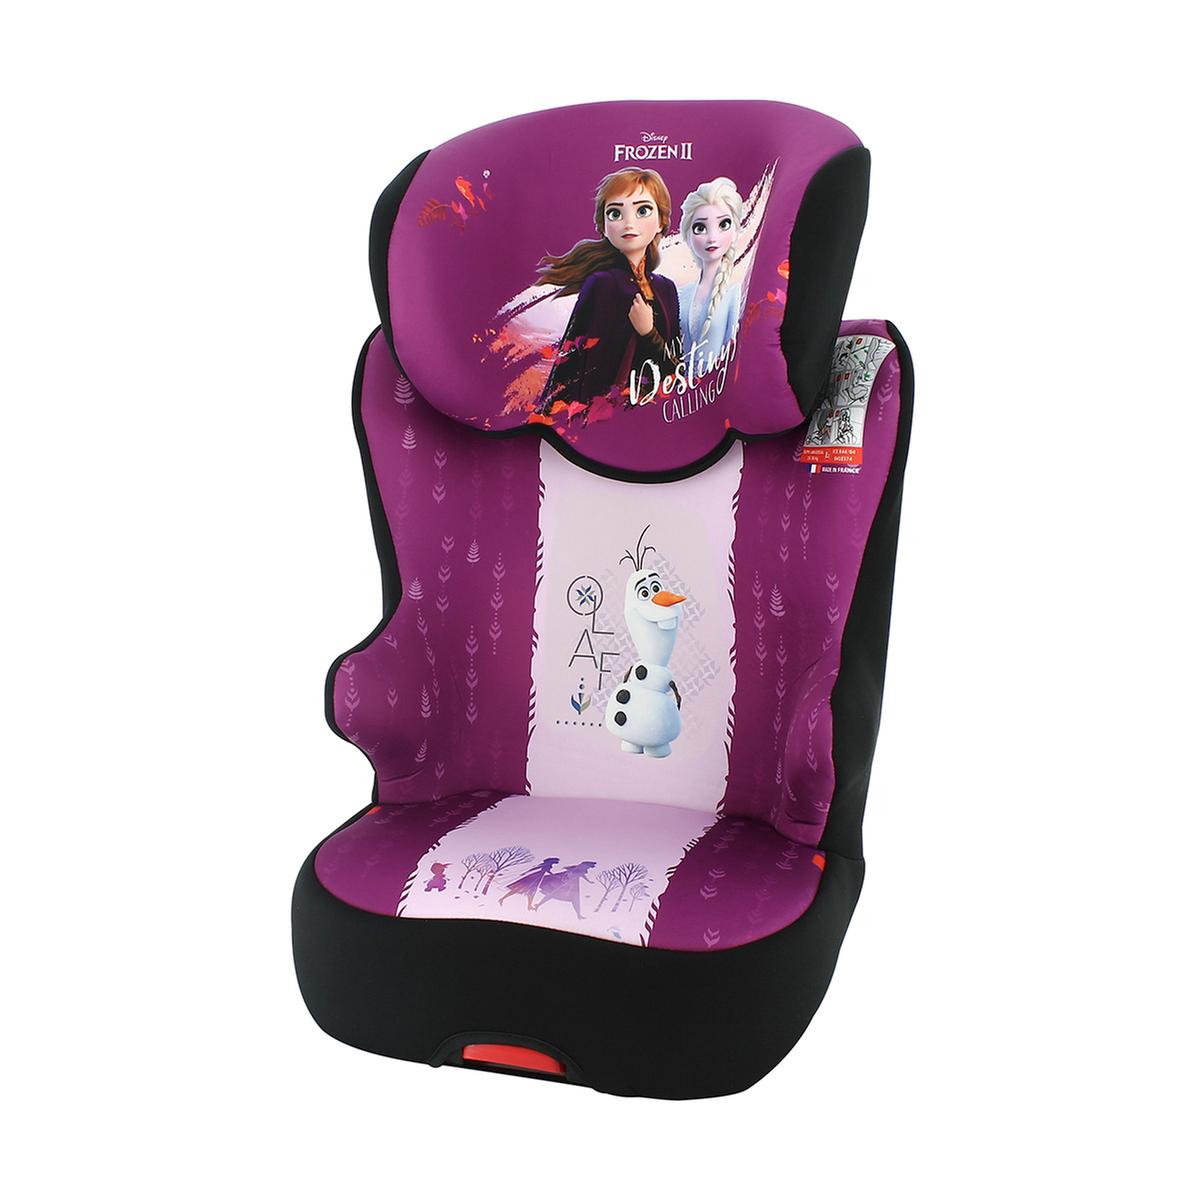 Frozen - Assento elevador Grupo 2-3 (De 15 a 36 kg) | Cadeiras Auto GRUPO  2/3 | Loja de brinquedos e videojogos Online Toysrus